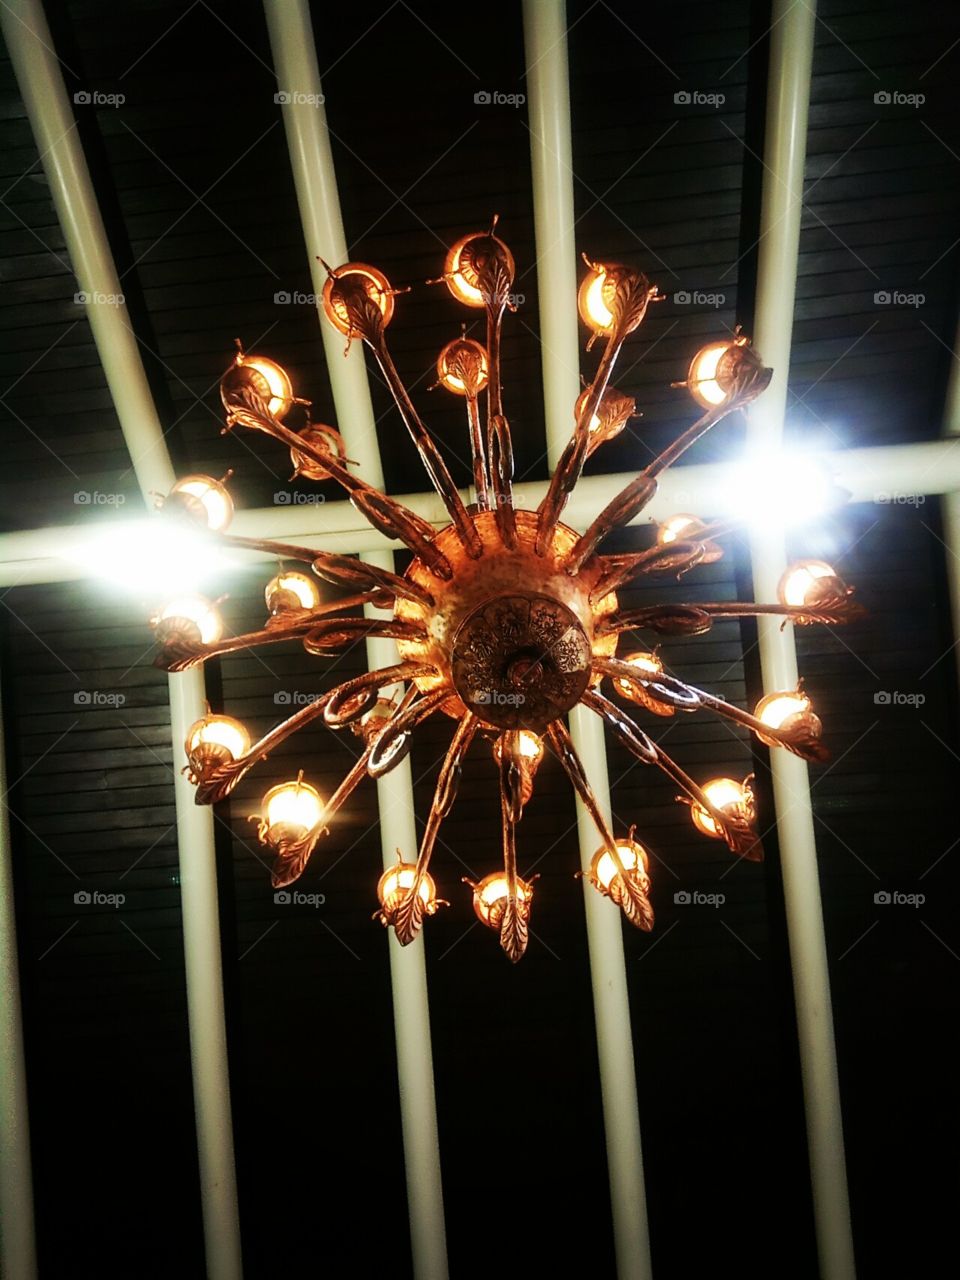 Decorative lights at soekarno Hatta airport,depature.